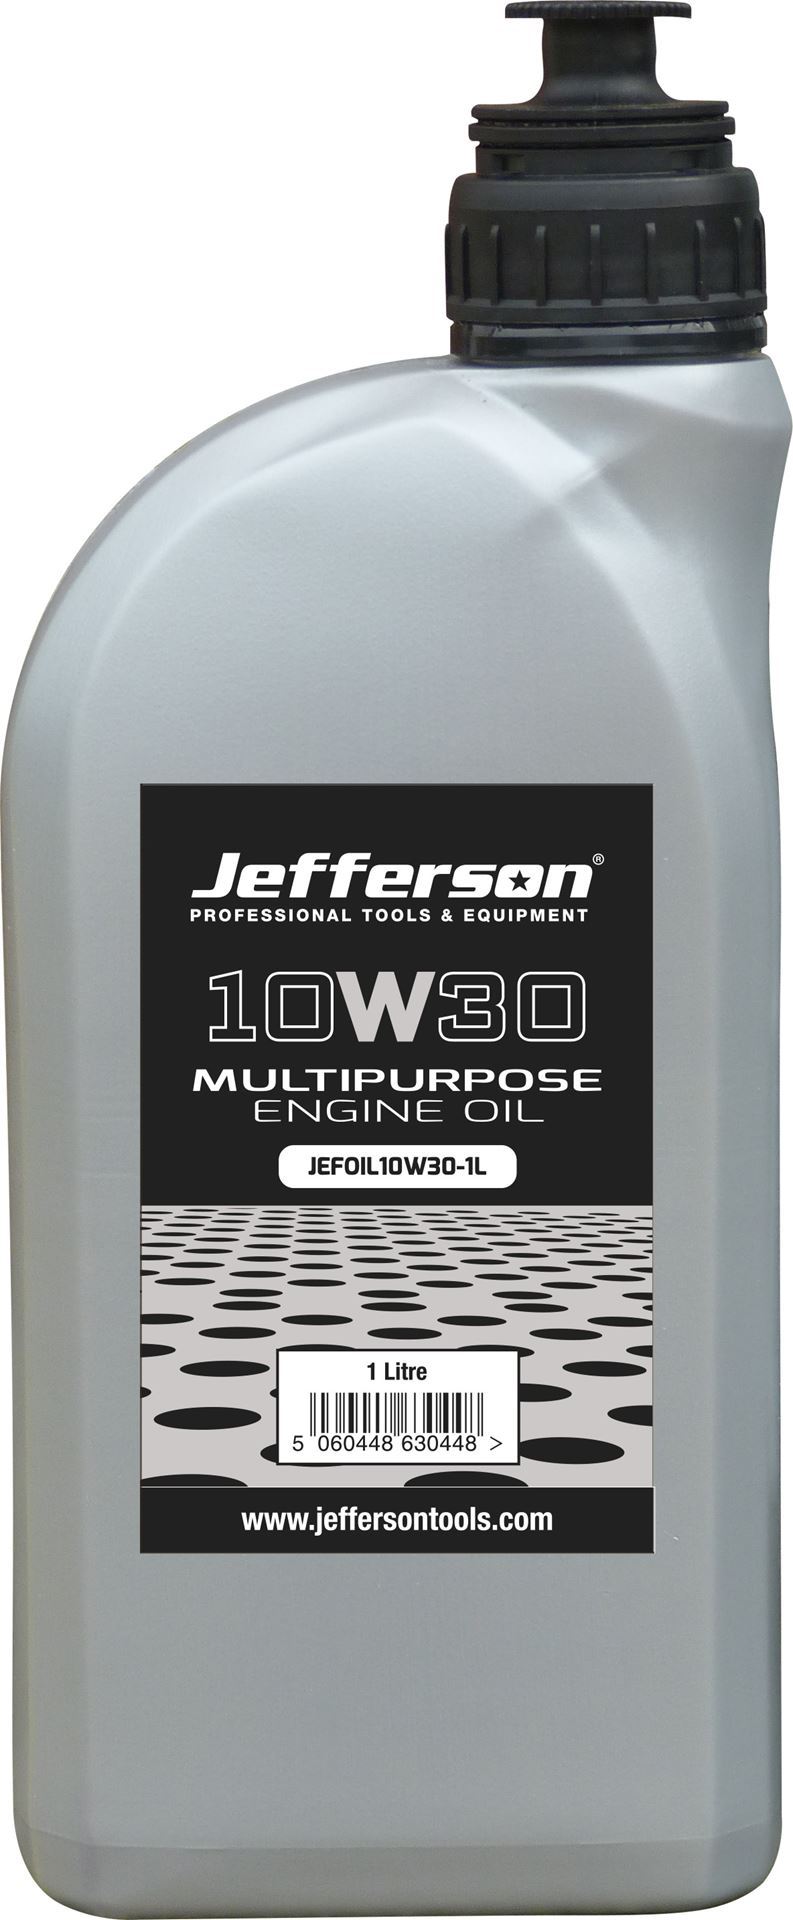 Jefferson - 10W30 Multipurpose Engine Oil (JEFOIL10W30-1L)